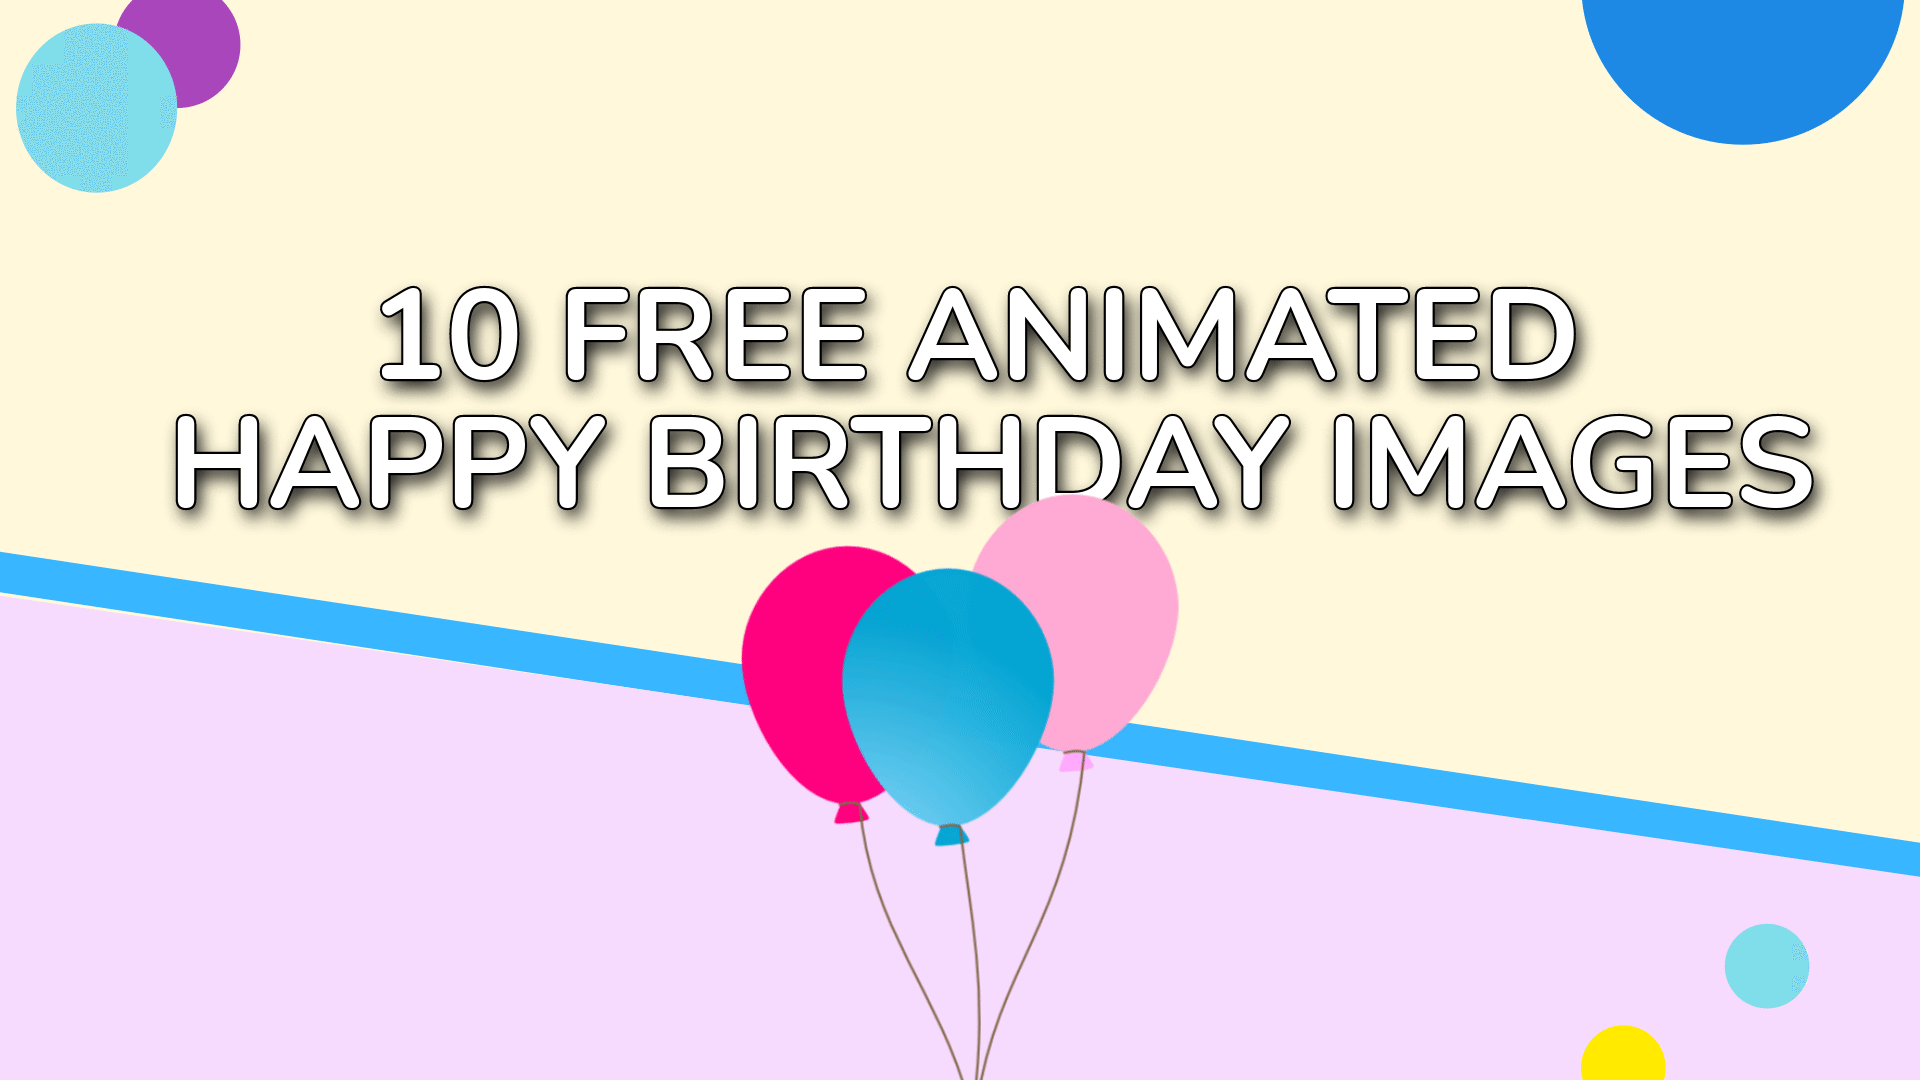 10 Free Animated Happy Birthday Images